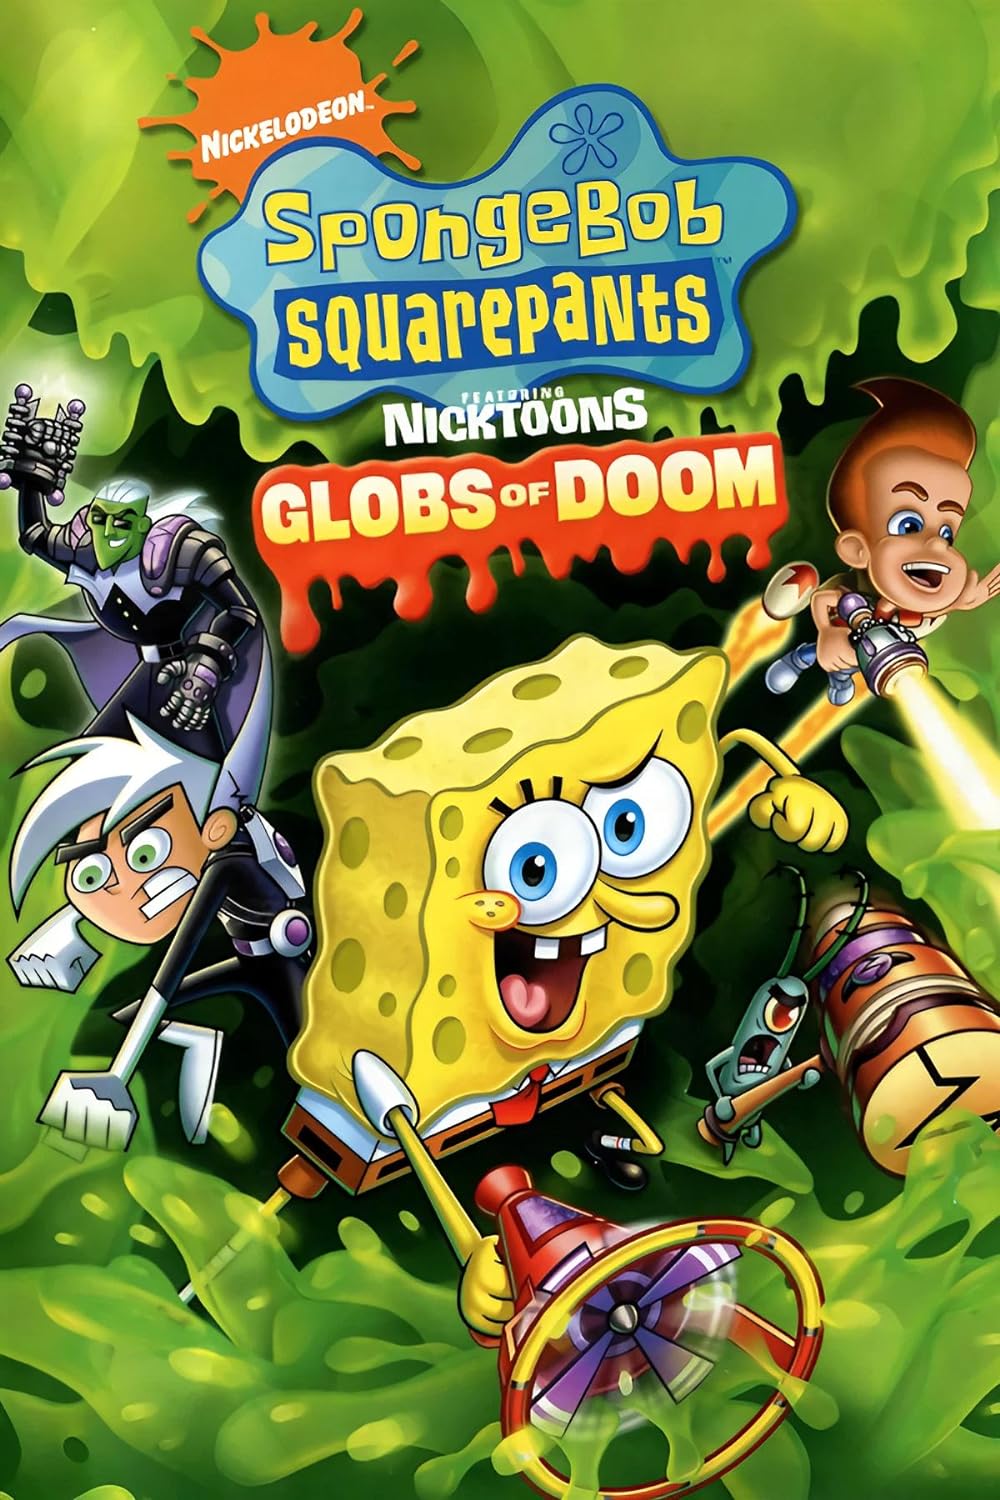 SpongeBob SquarePants featuring Nicktoons: Globs of Doom 